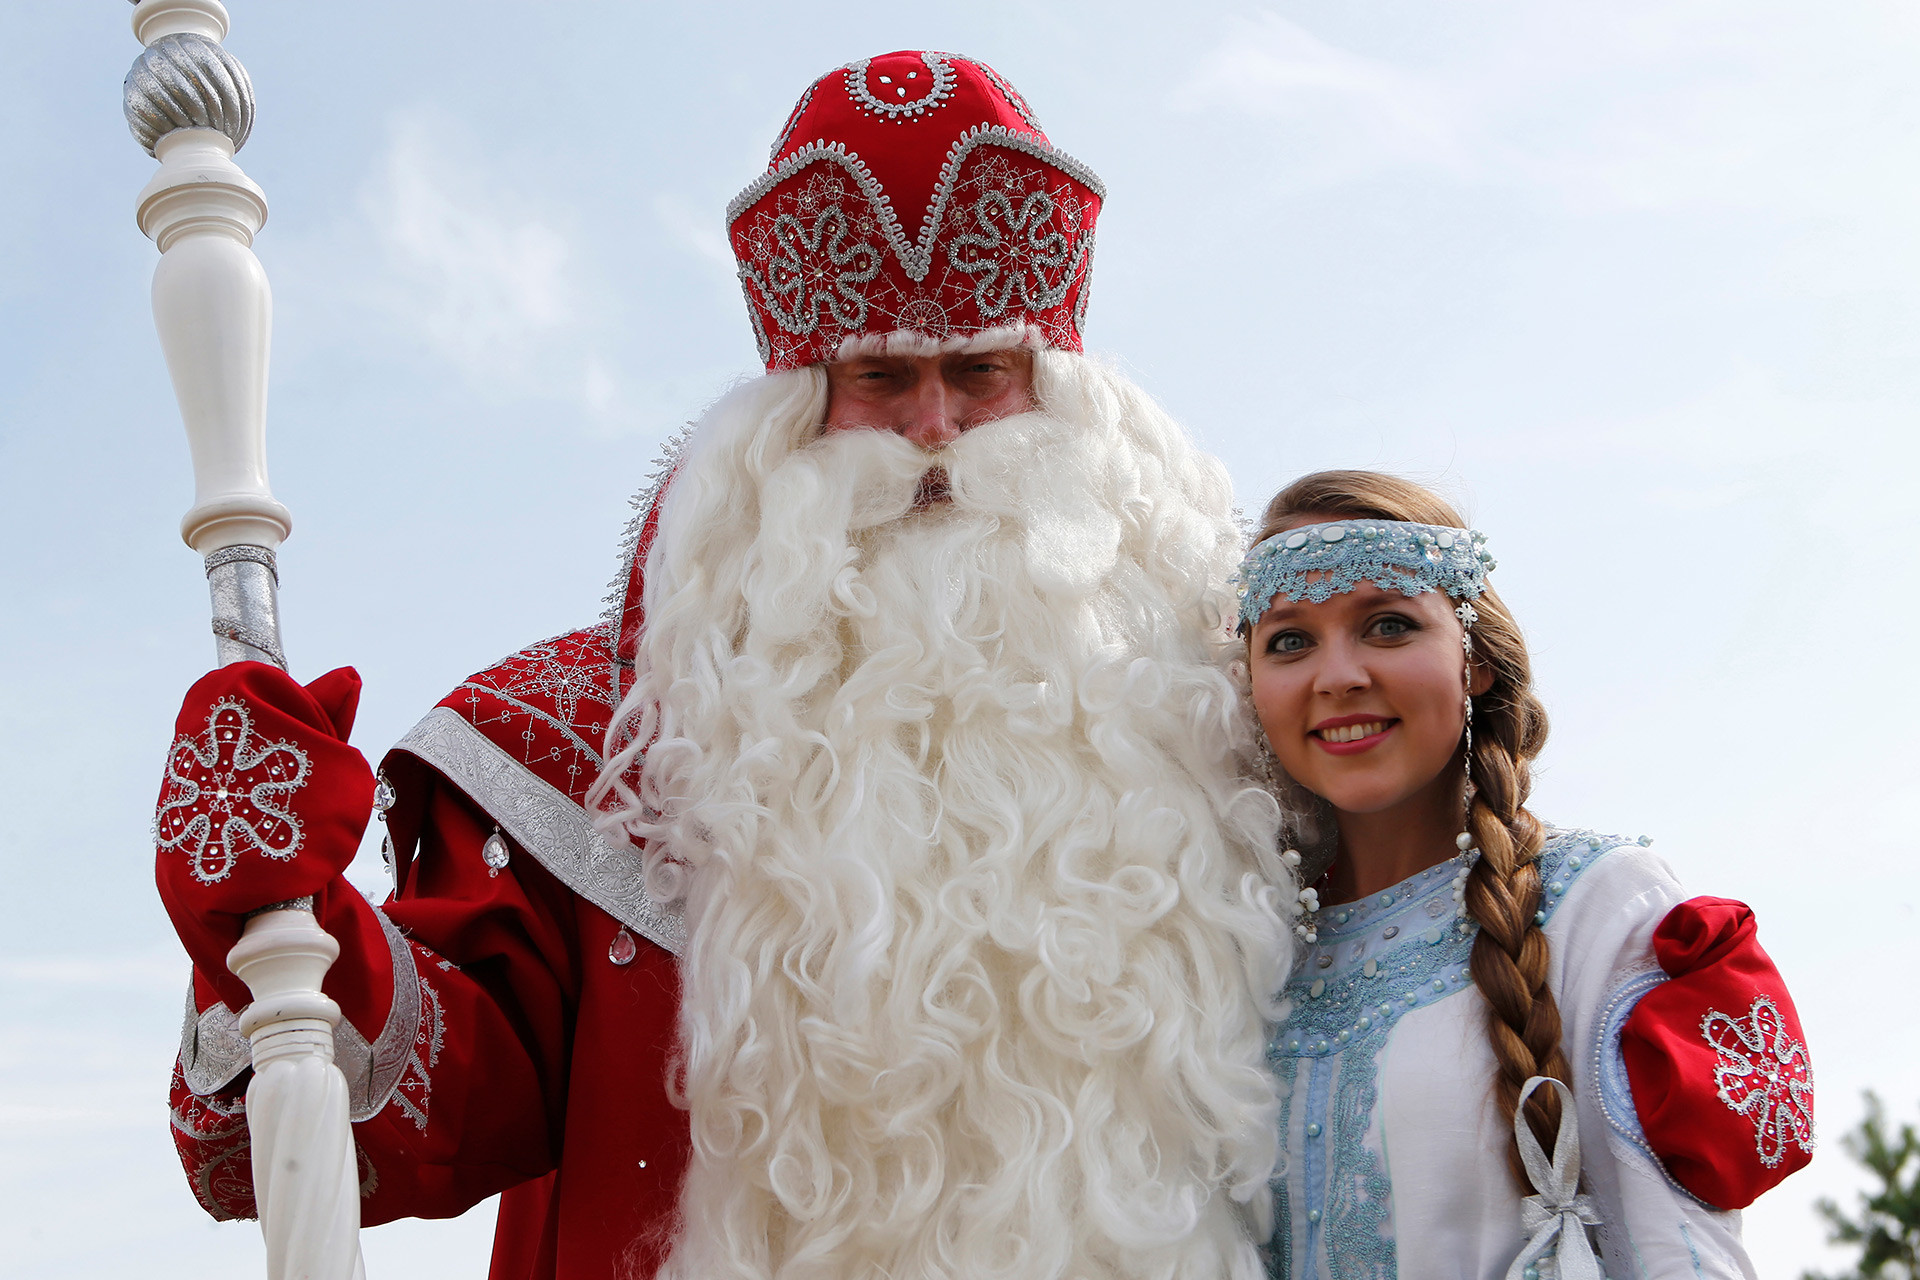 Ded Moroz dan Snegurochka

